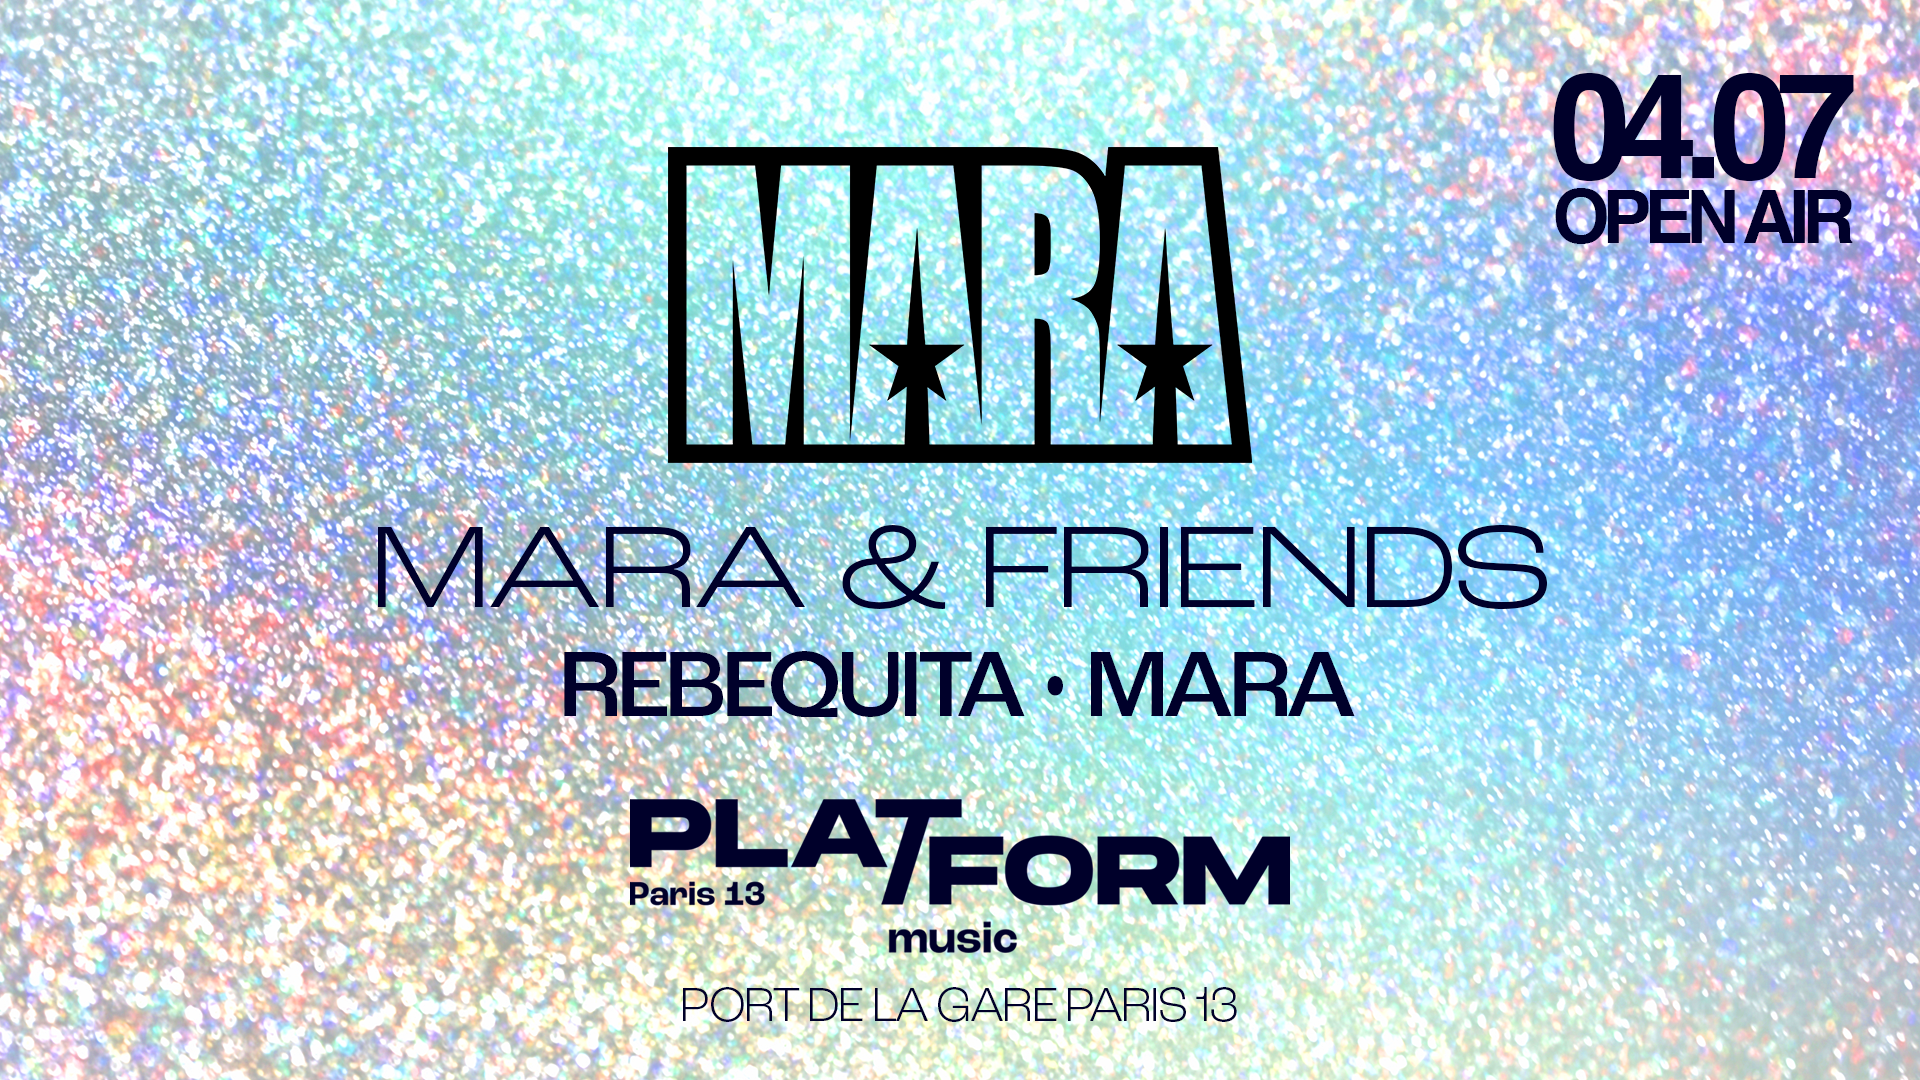 Mara & friends